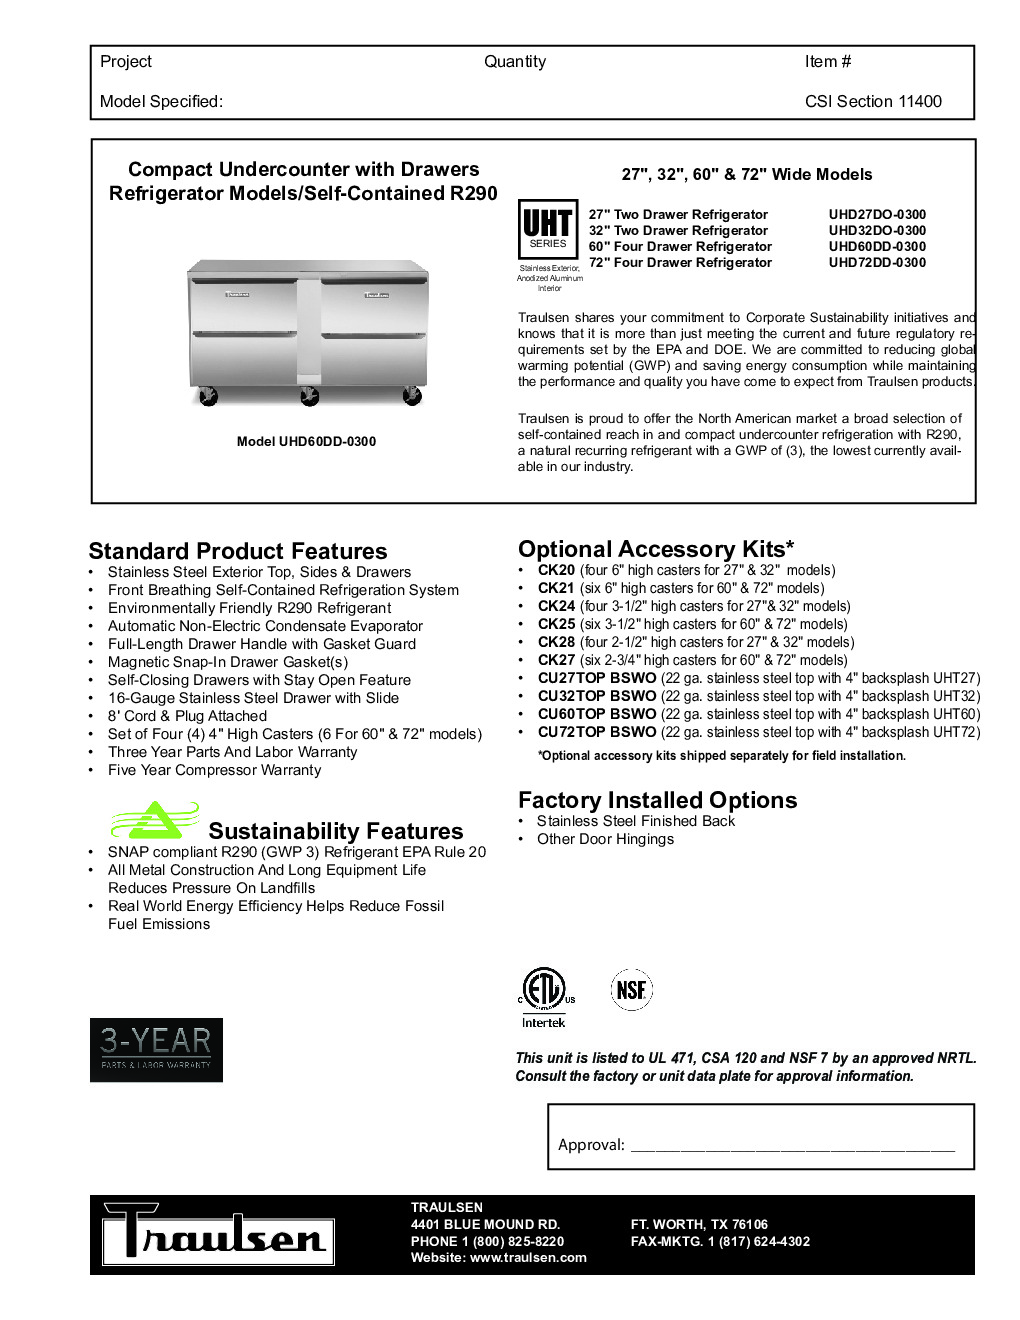 Traulsen UHD72DD-0300-SB Reach-In Undercounter Refrigerator